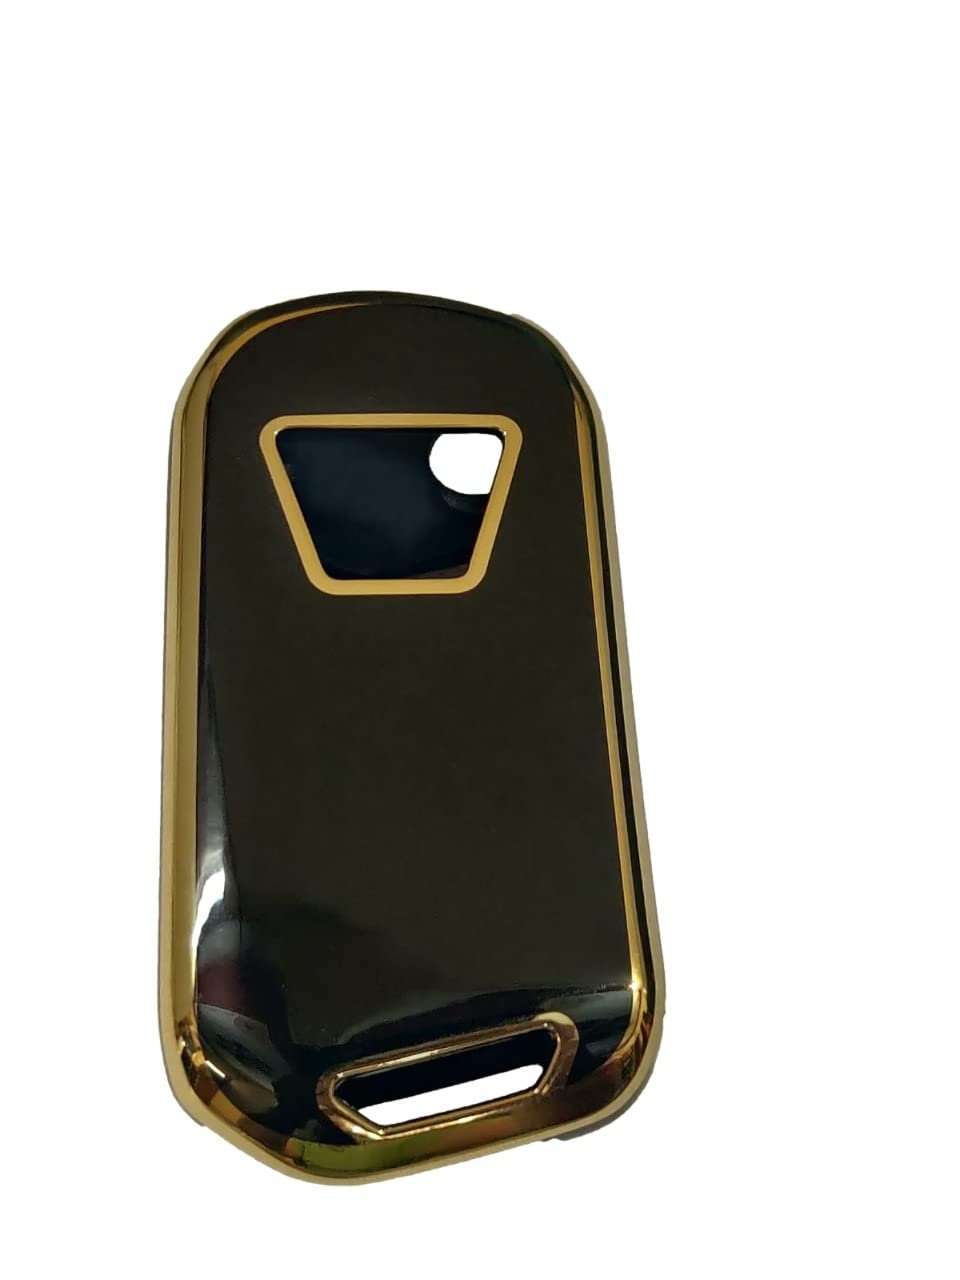 TPU silicone key cover for Compatible with for New Mahindra Scorpio 2022, XUV 700, Thar 2020, Tuv-300, Marazzo, Scorpio 2019, Bolero 2020 Flip Key (Black) Image 